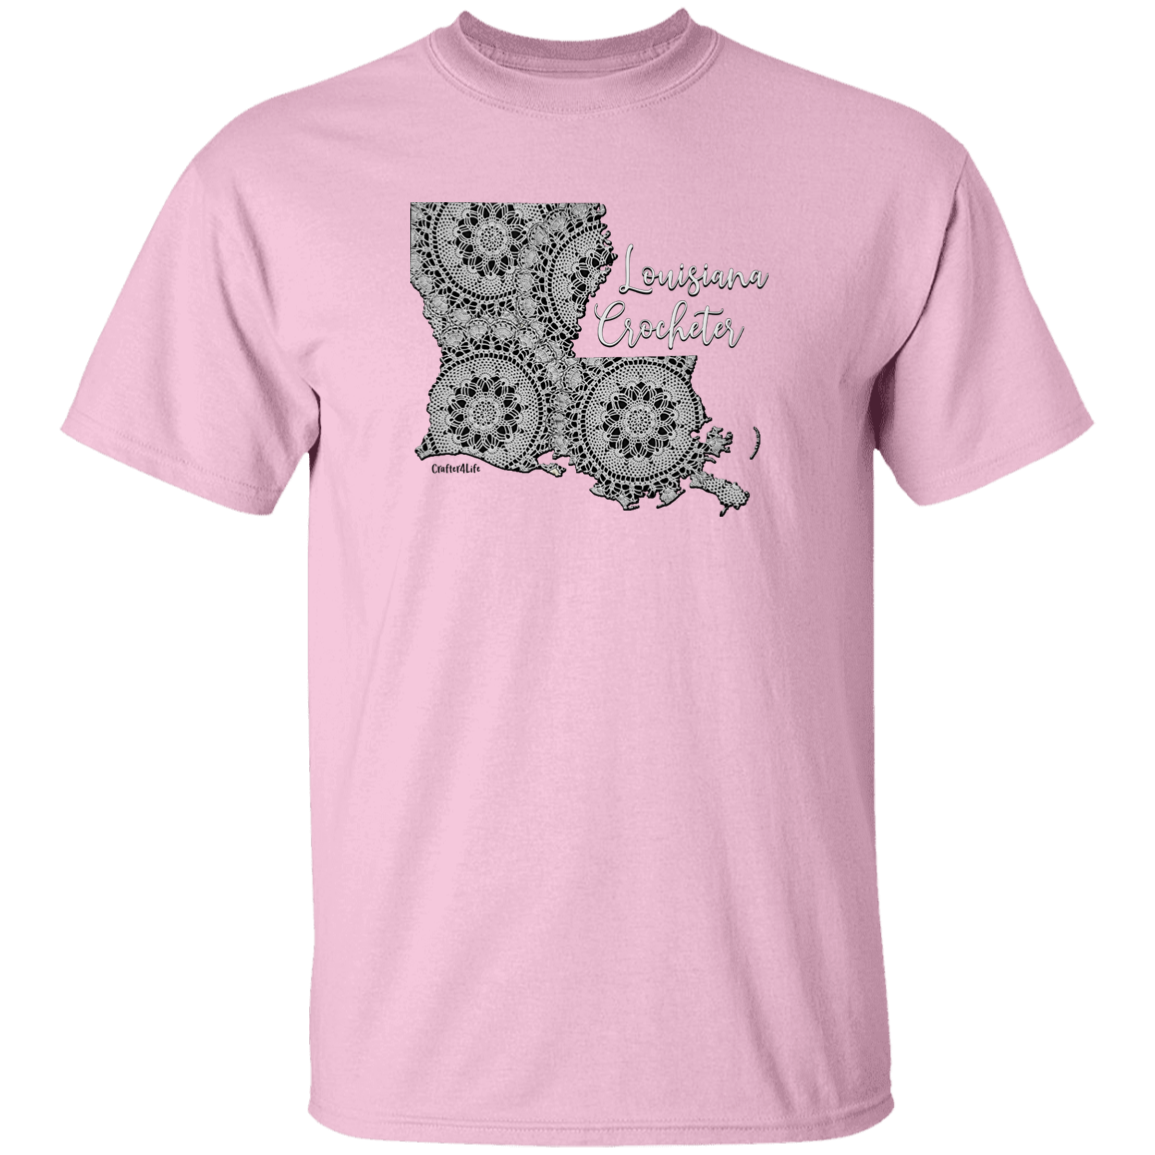 Louisiana Crocheter T-Shirt